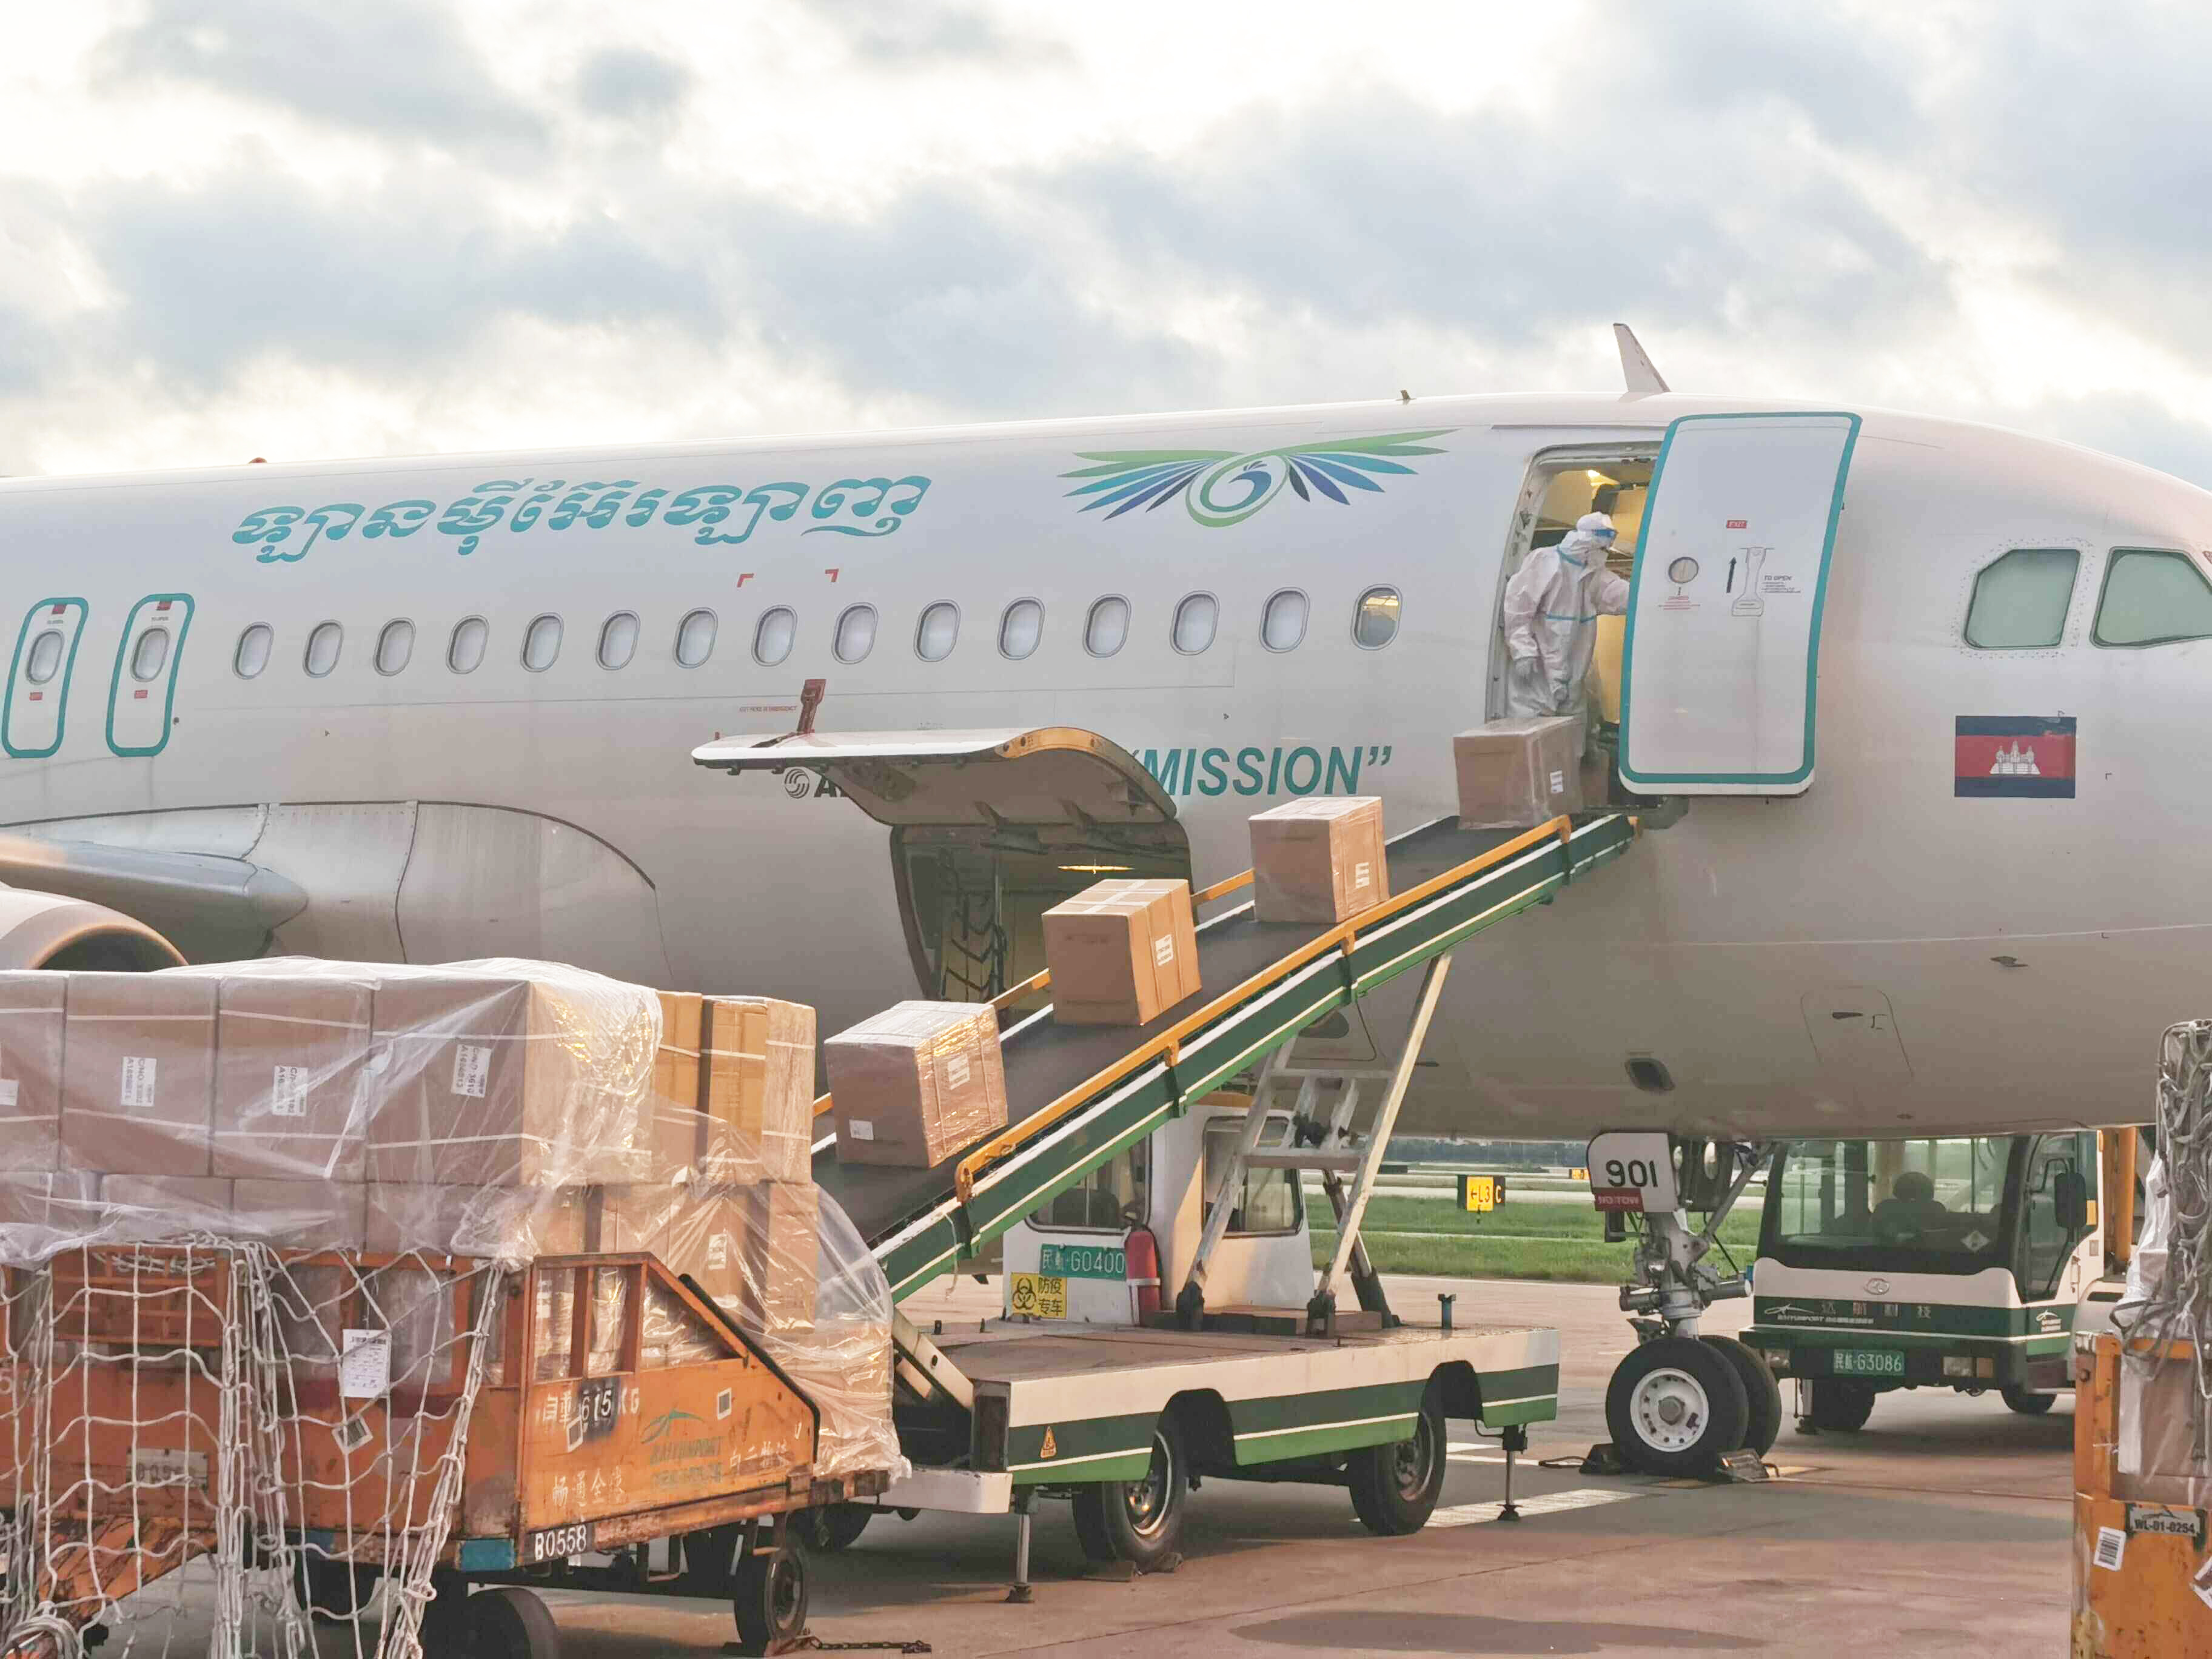 Freight forwarder from Shenzhen Guangzhou China to London UK air shipping service, Sunny Worldwide Logistics